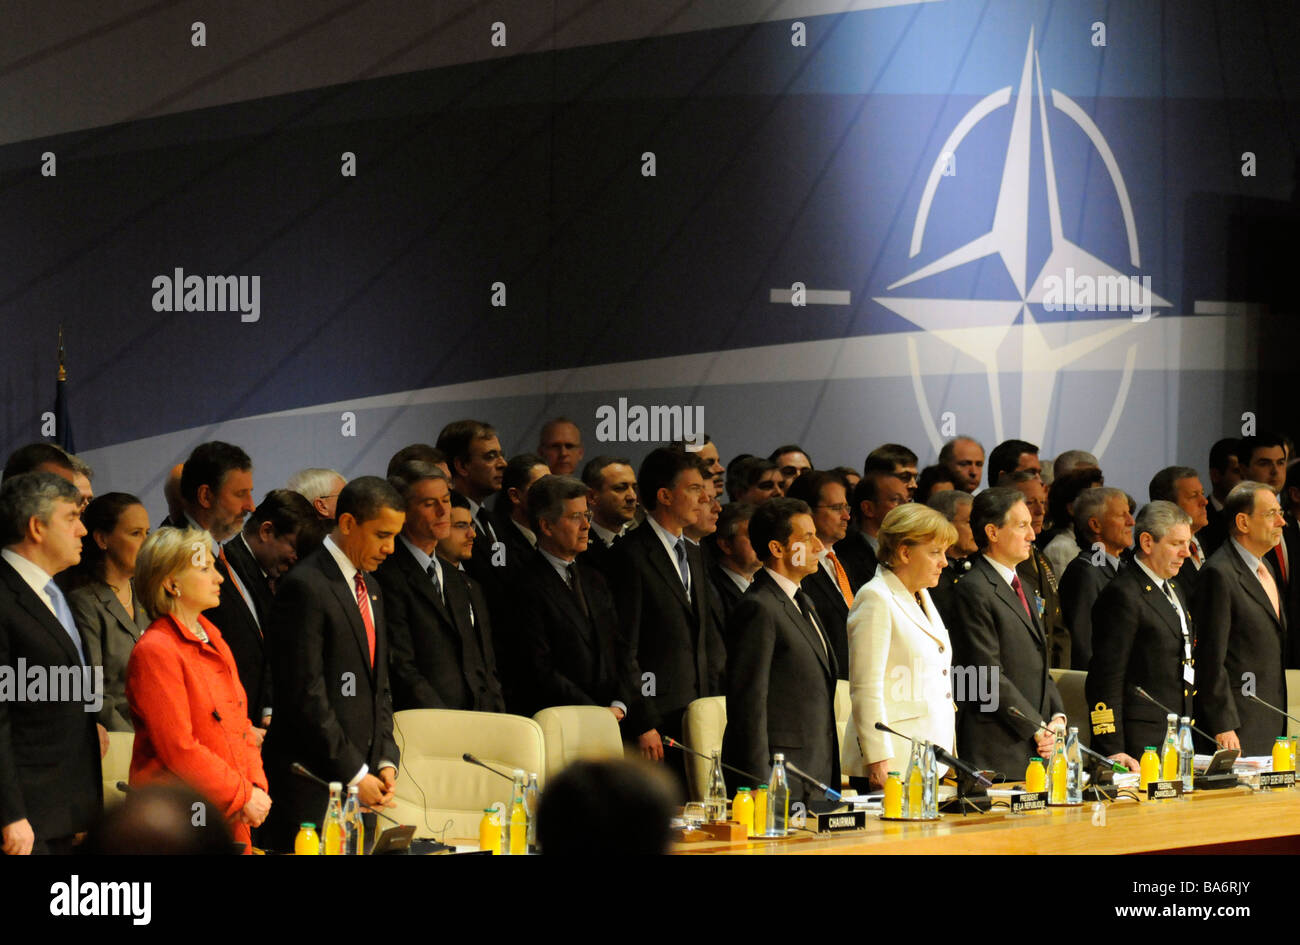 Leaders of NATO including Gordon Brown, Barack Obama, Nicolas Sarkozy, and Angela Merkel during the 2009 Strasbourg summit. Stock Photo